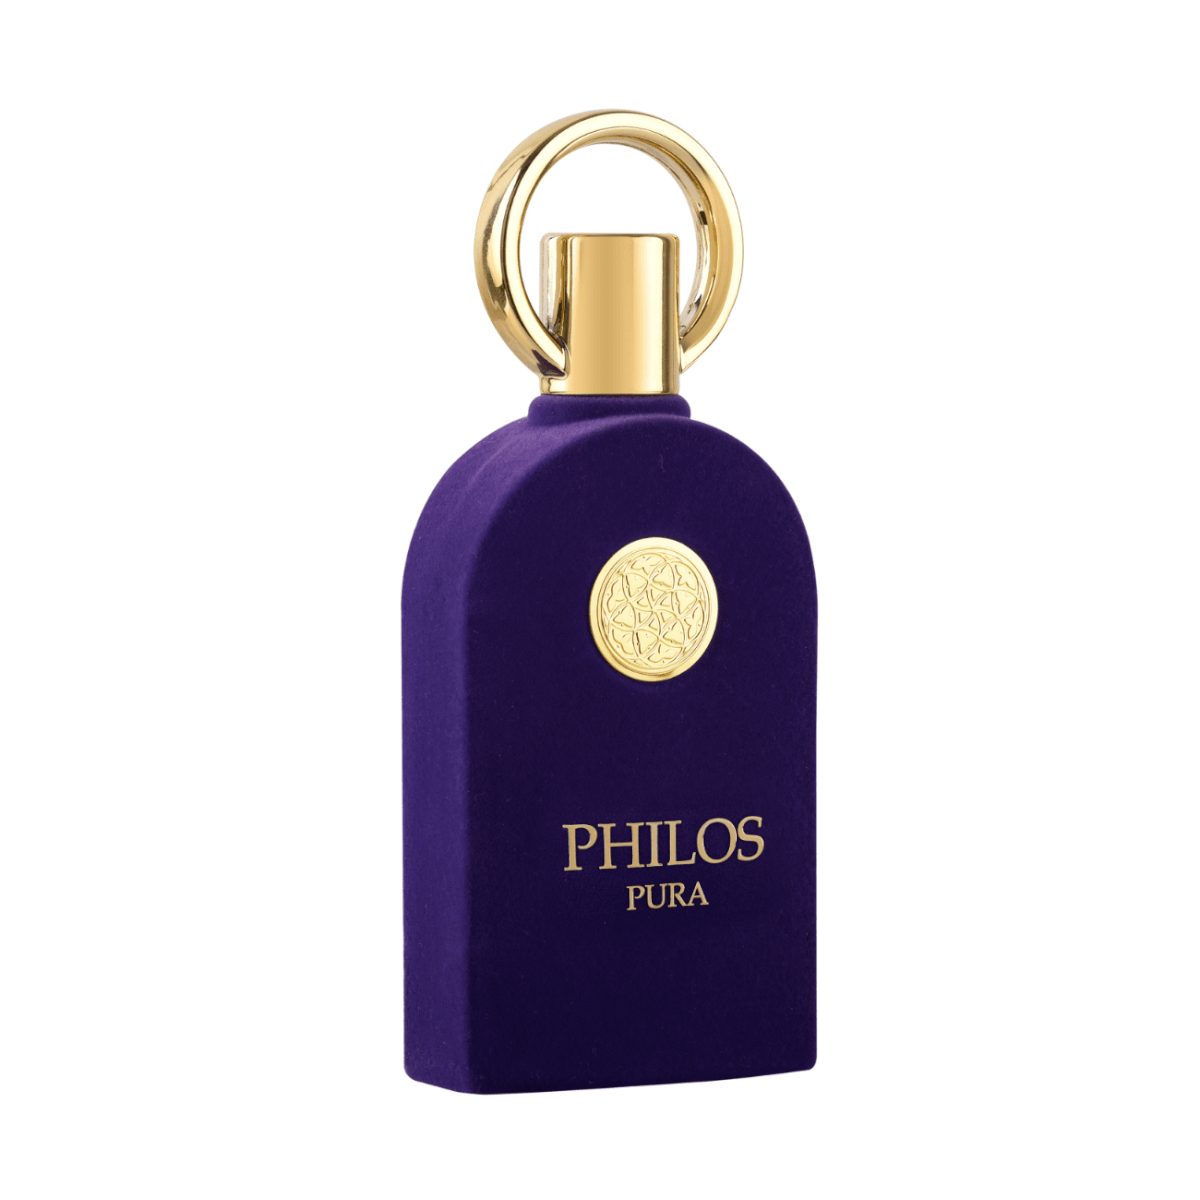 Philos Pura Perfume / Eau De Parfum 100Ml By Maison Alhambra / Lattafa (Inspired By Xerjoff Erba Pura)